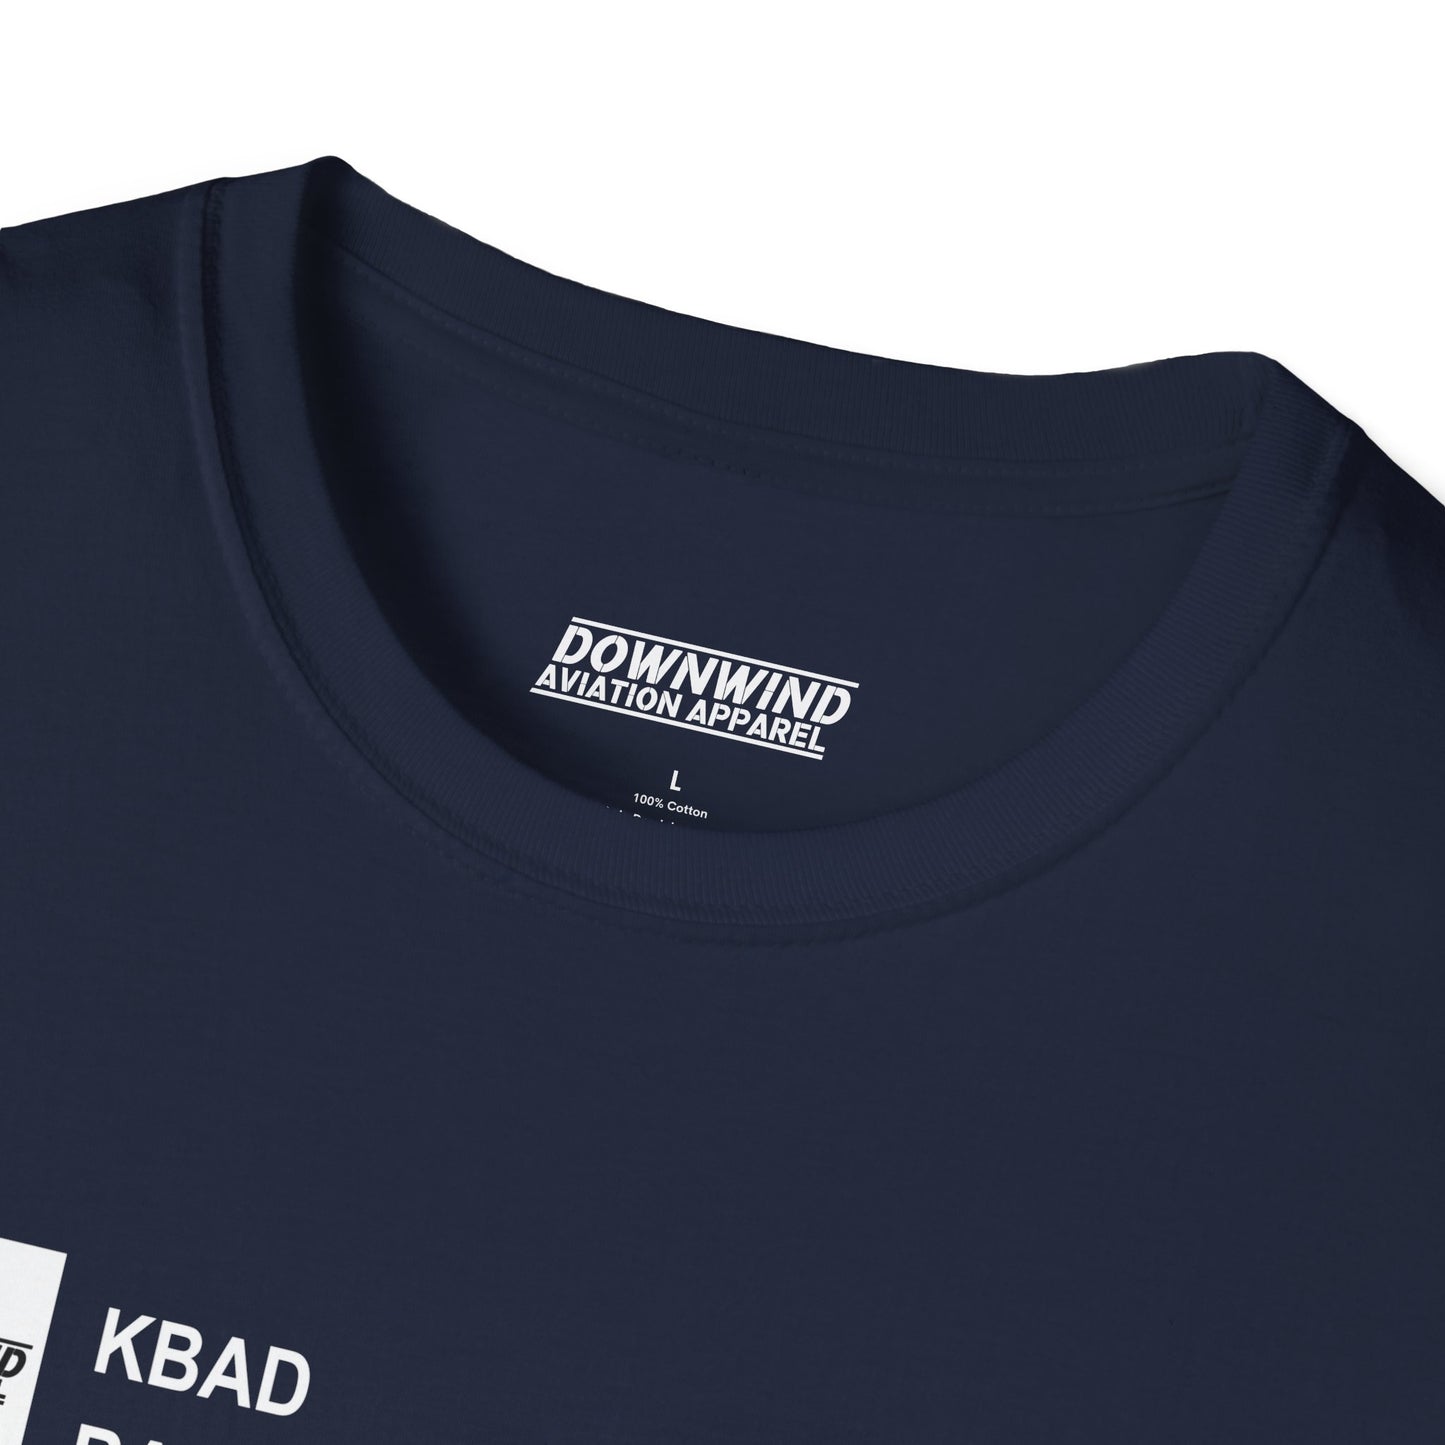 KBAD / Barksdale Air Force Base T-Shirt